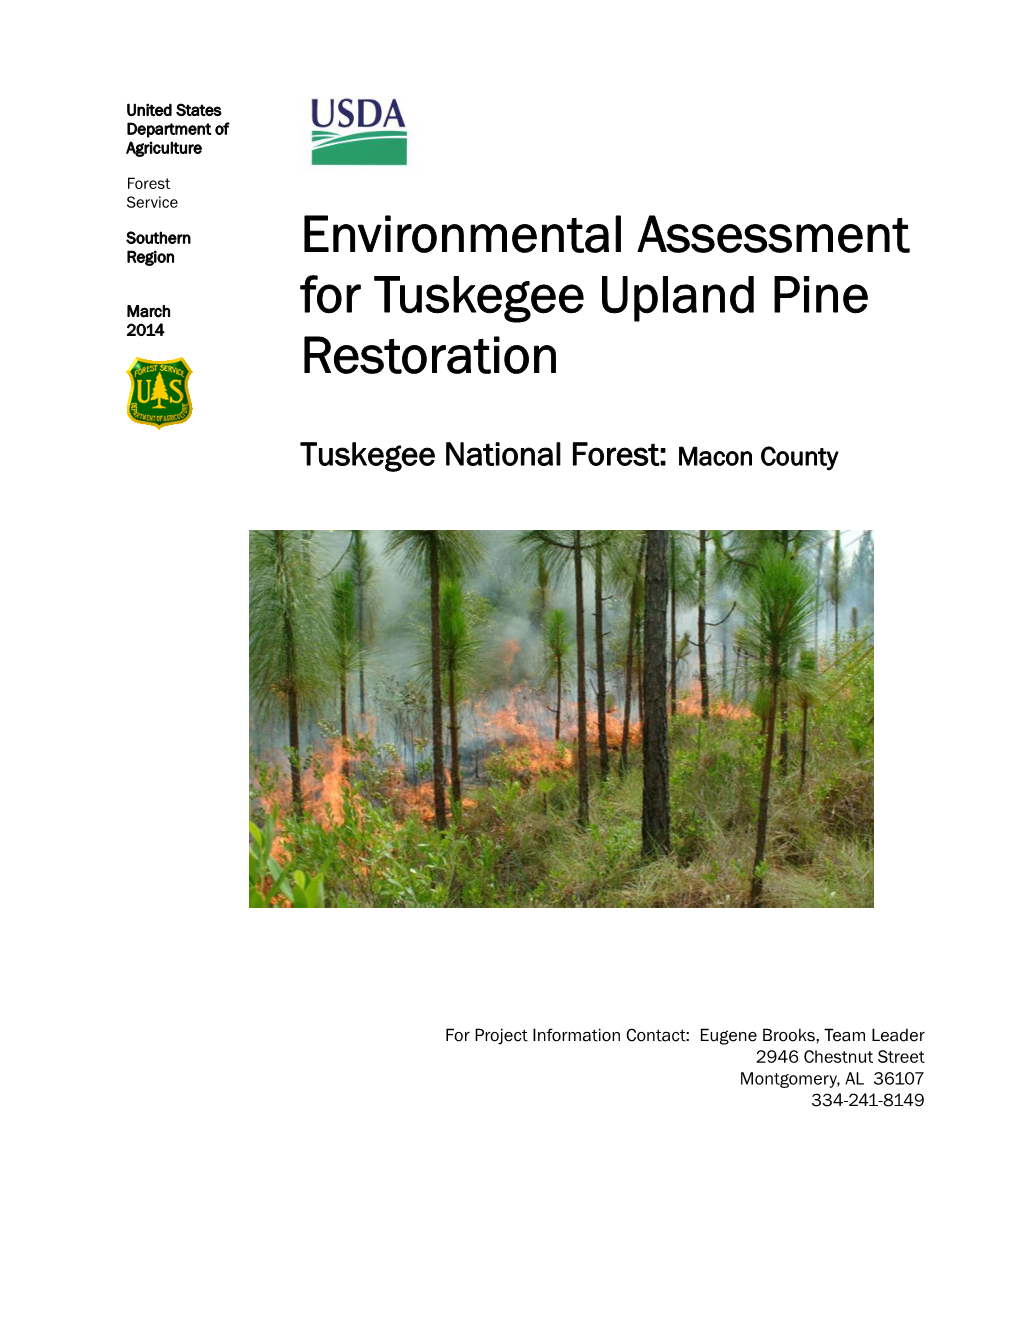 Environmental Assessment for Tuskegee Upland Pine Restoration